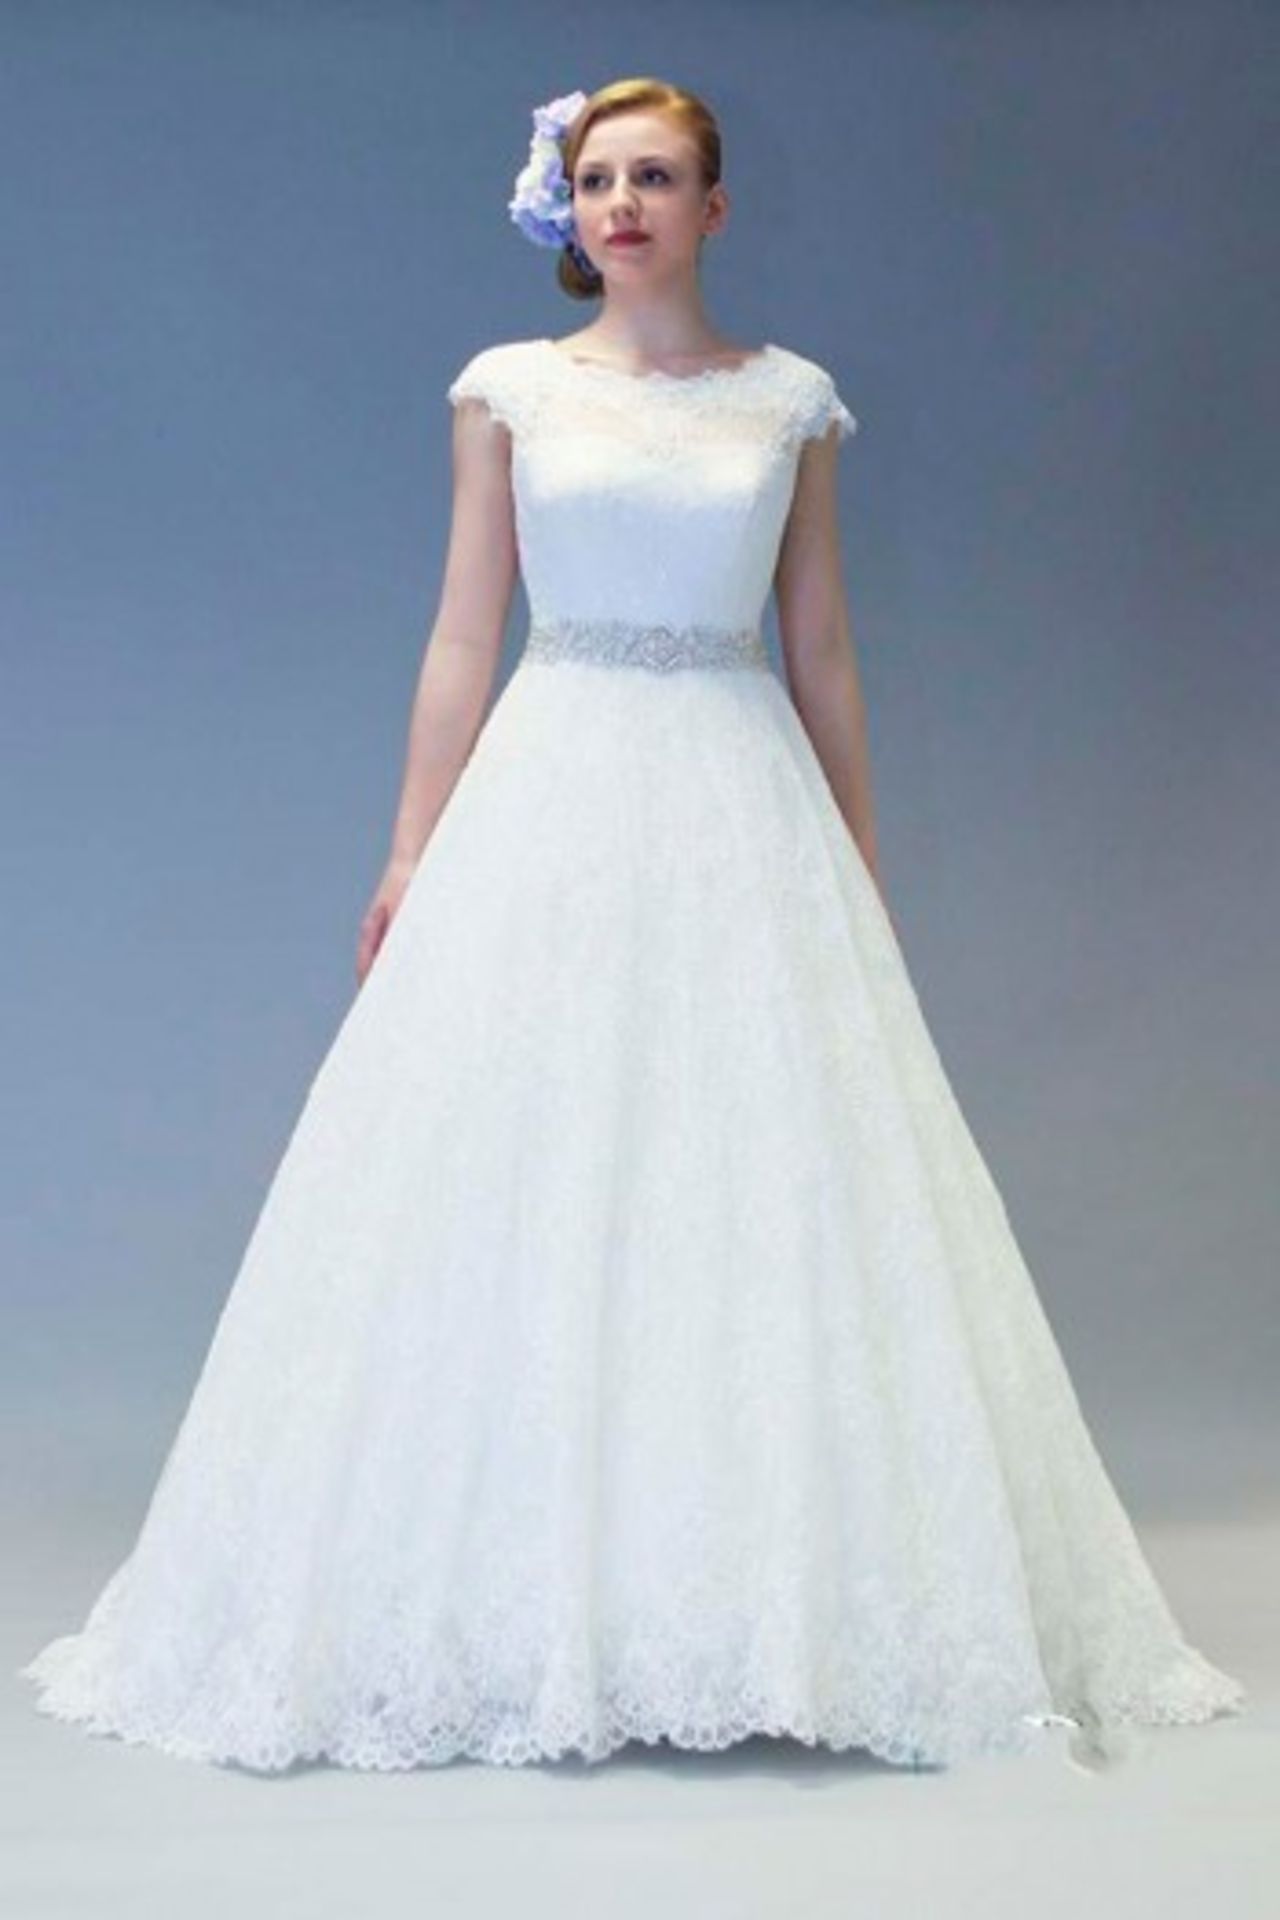 80 x Various Ex-Display Wedding Dresses - Brands inc: LadyBird, White Rose & Lillian West - Image 38 of 60